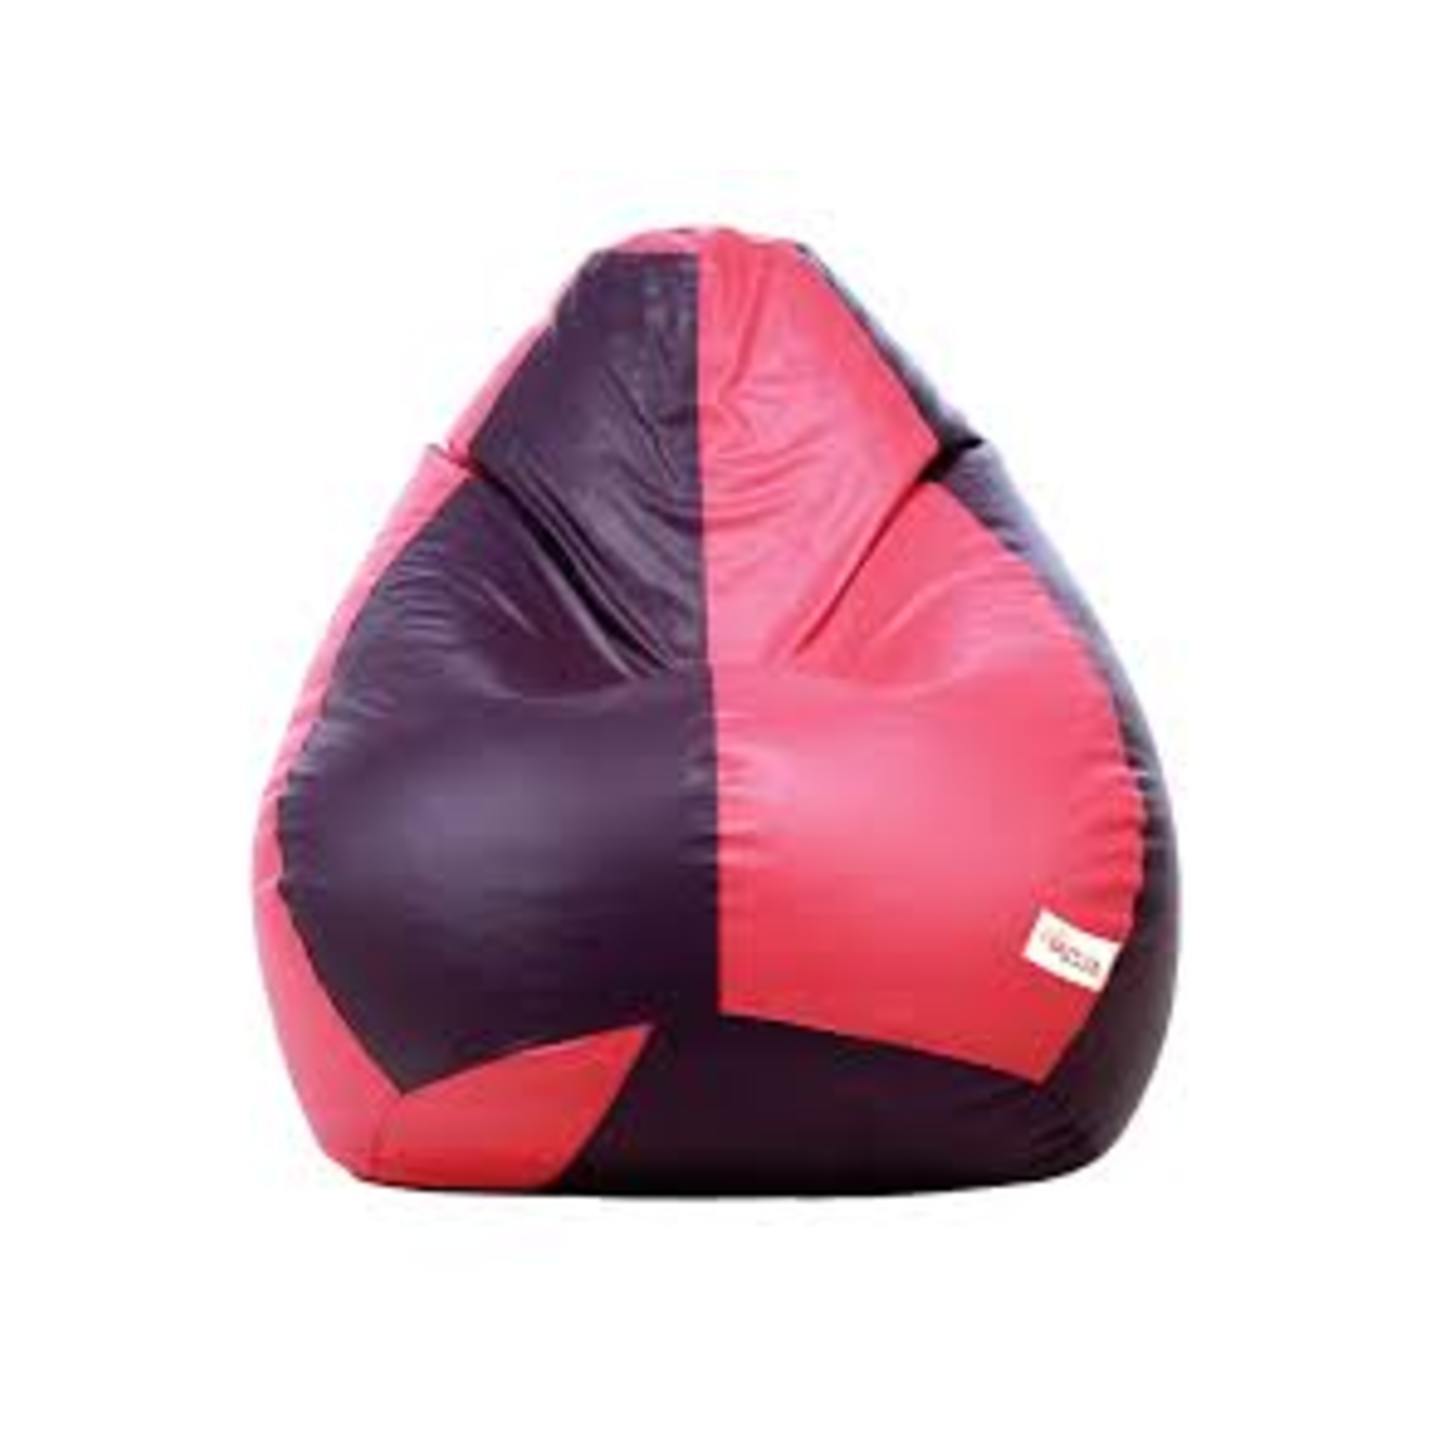 VFR XXL Bean Bag With Beans Plain In Red & Purple Colour